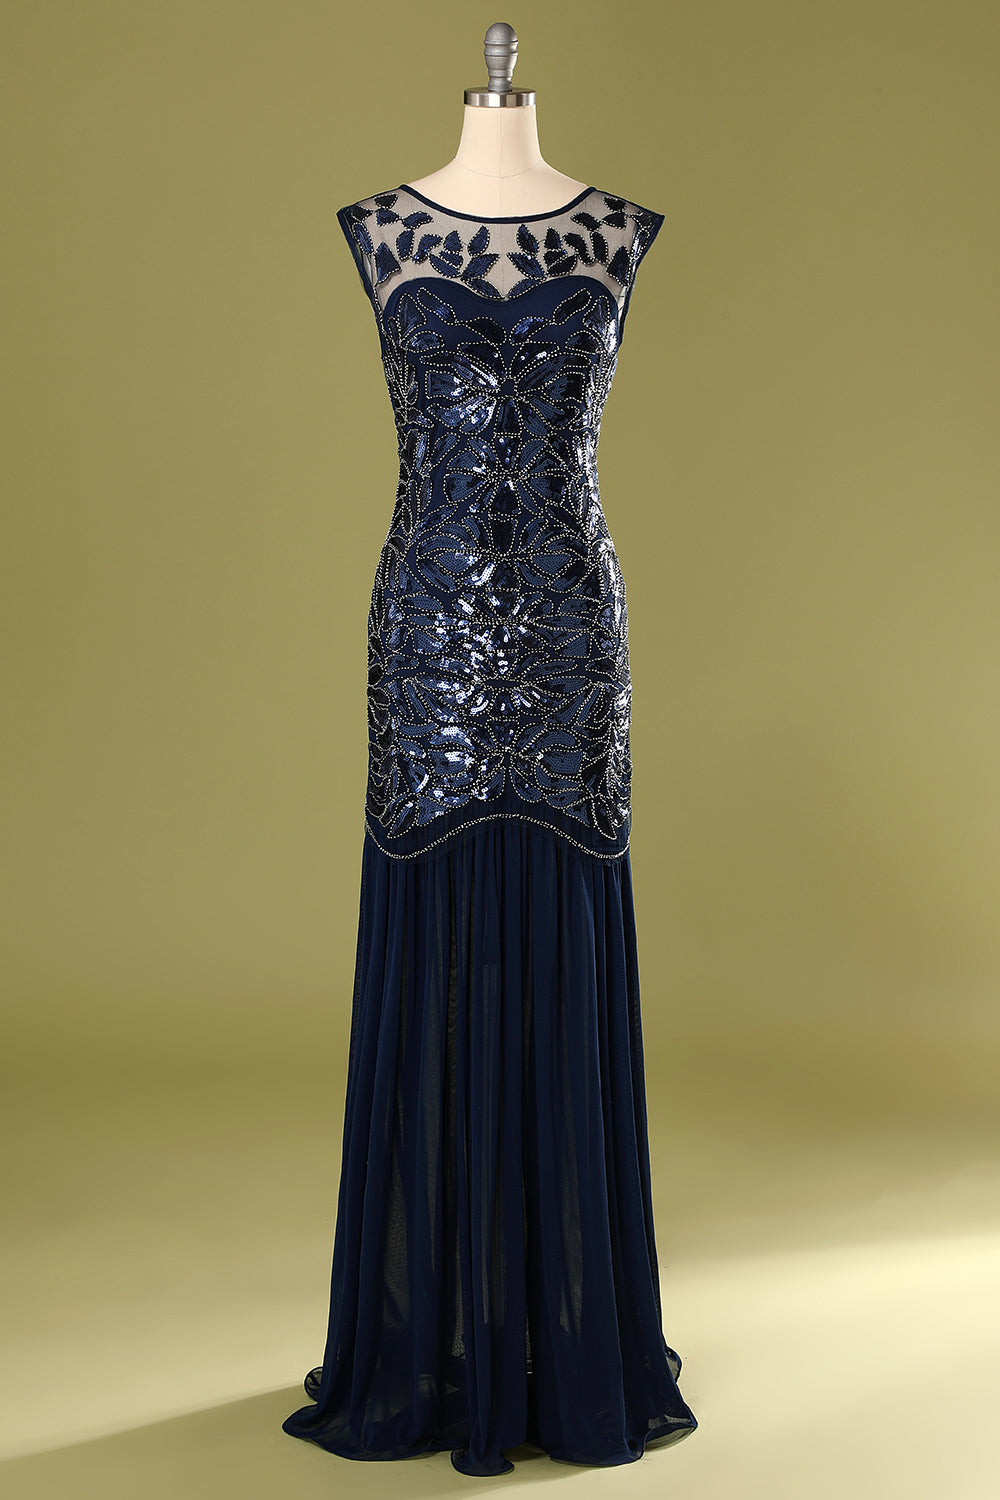 1920s formal dresses